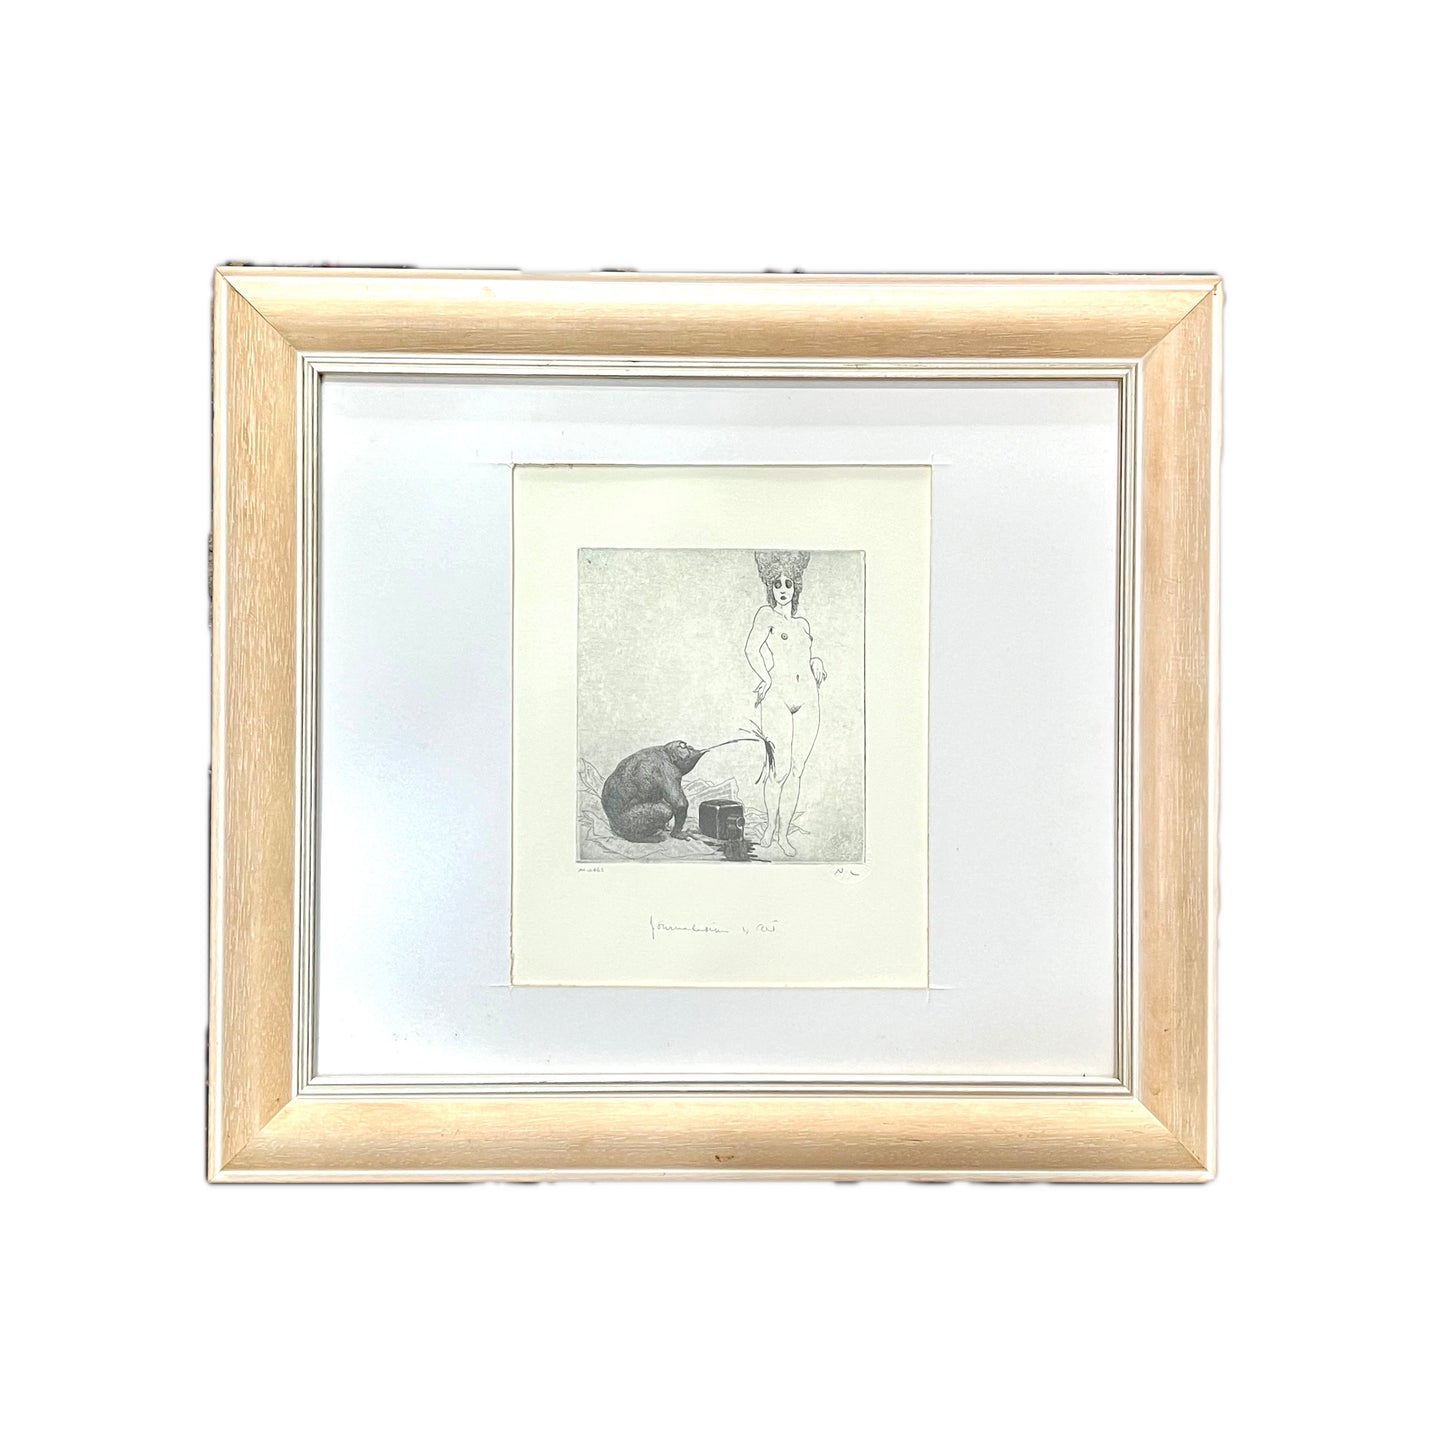 Vintage 20th century Norman Lindsay facsimile etching titled “Journalism & Art” circa 1999